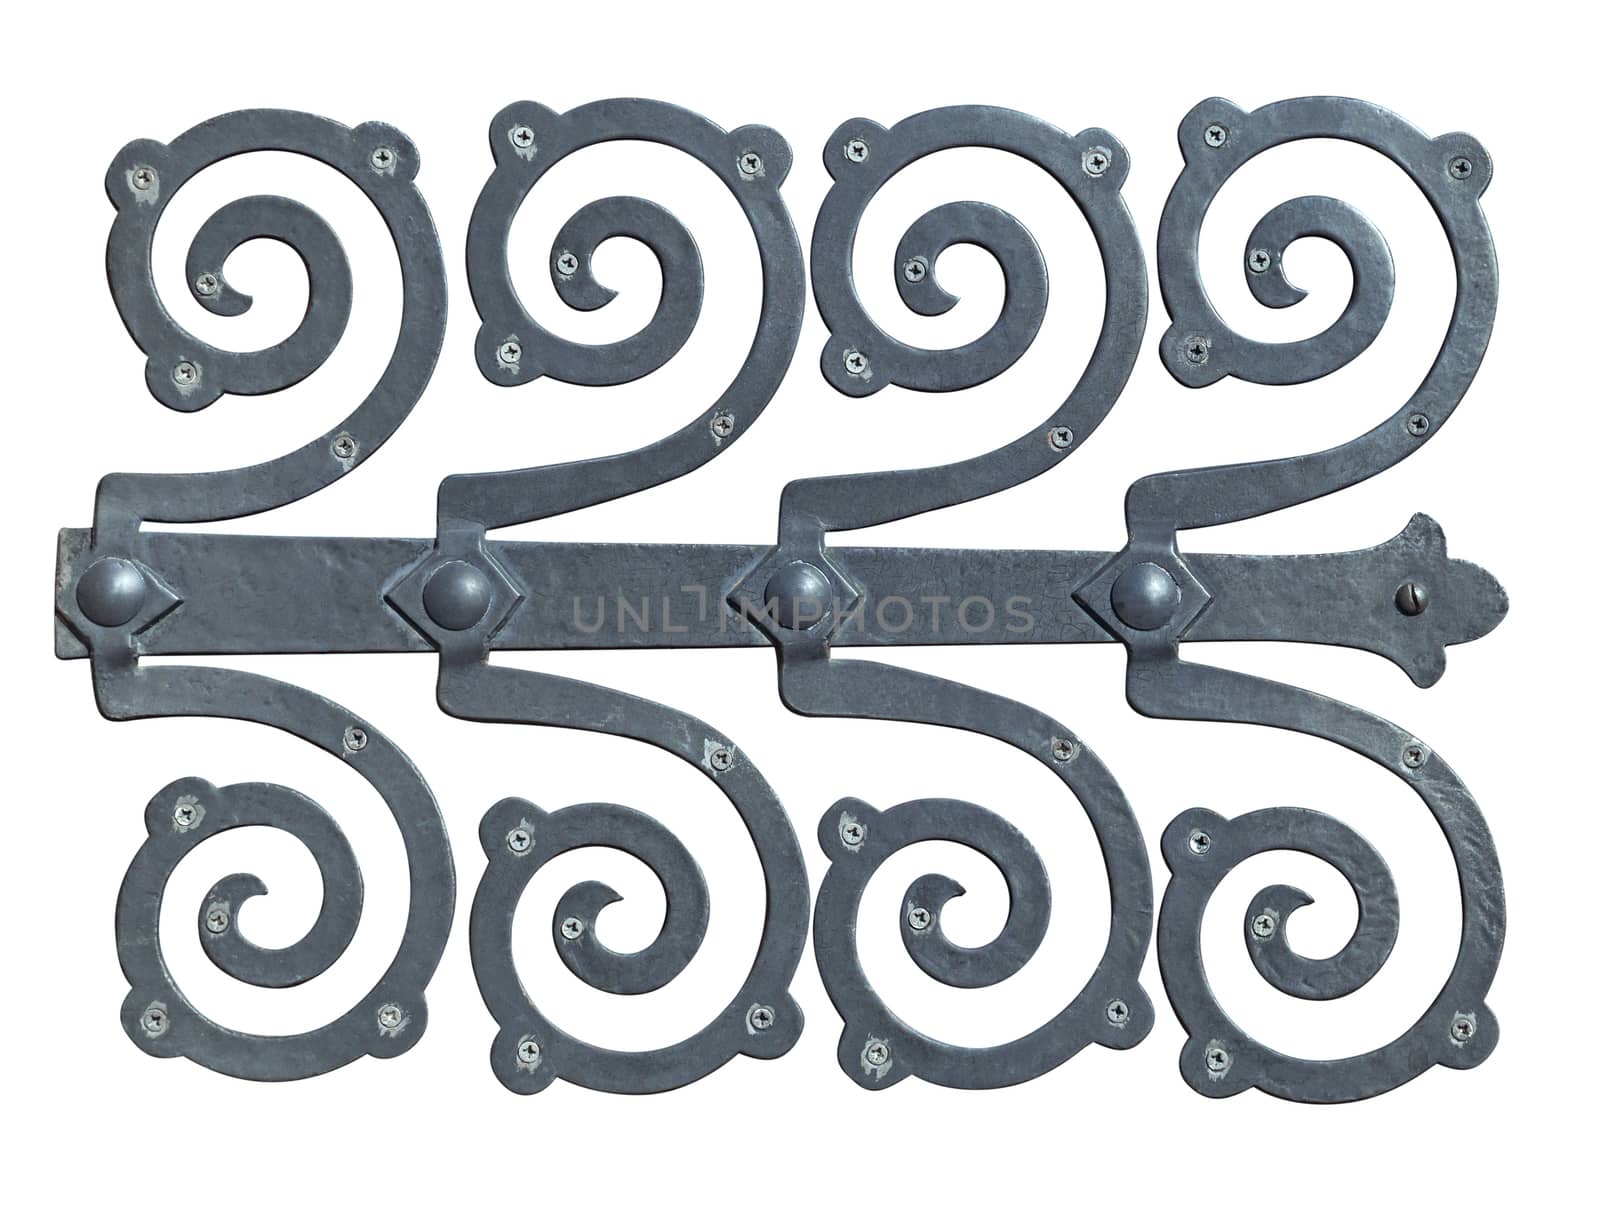 Decorative metal hinge isolated over white background